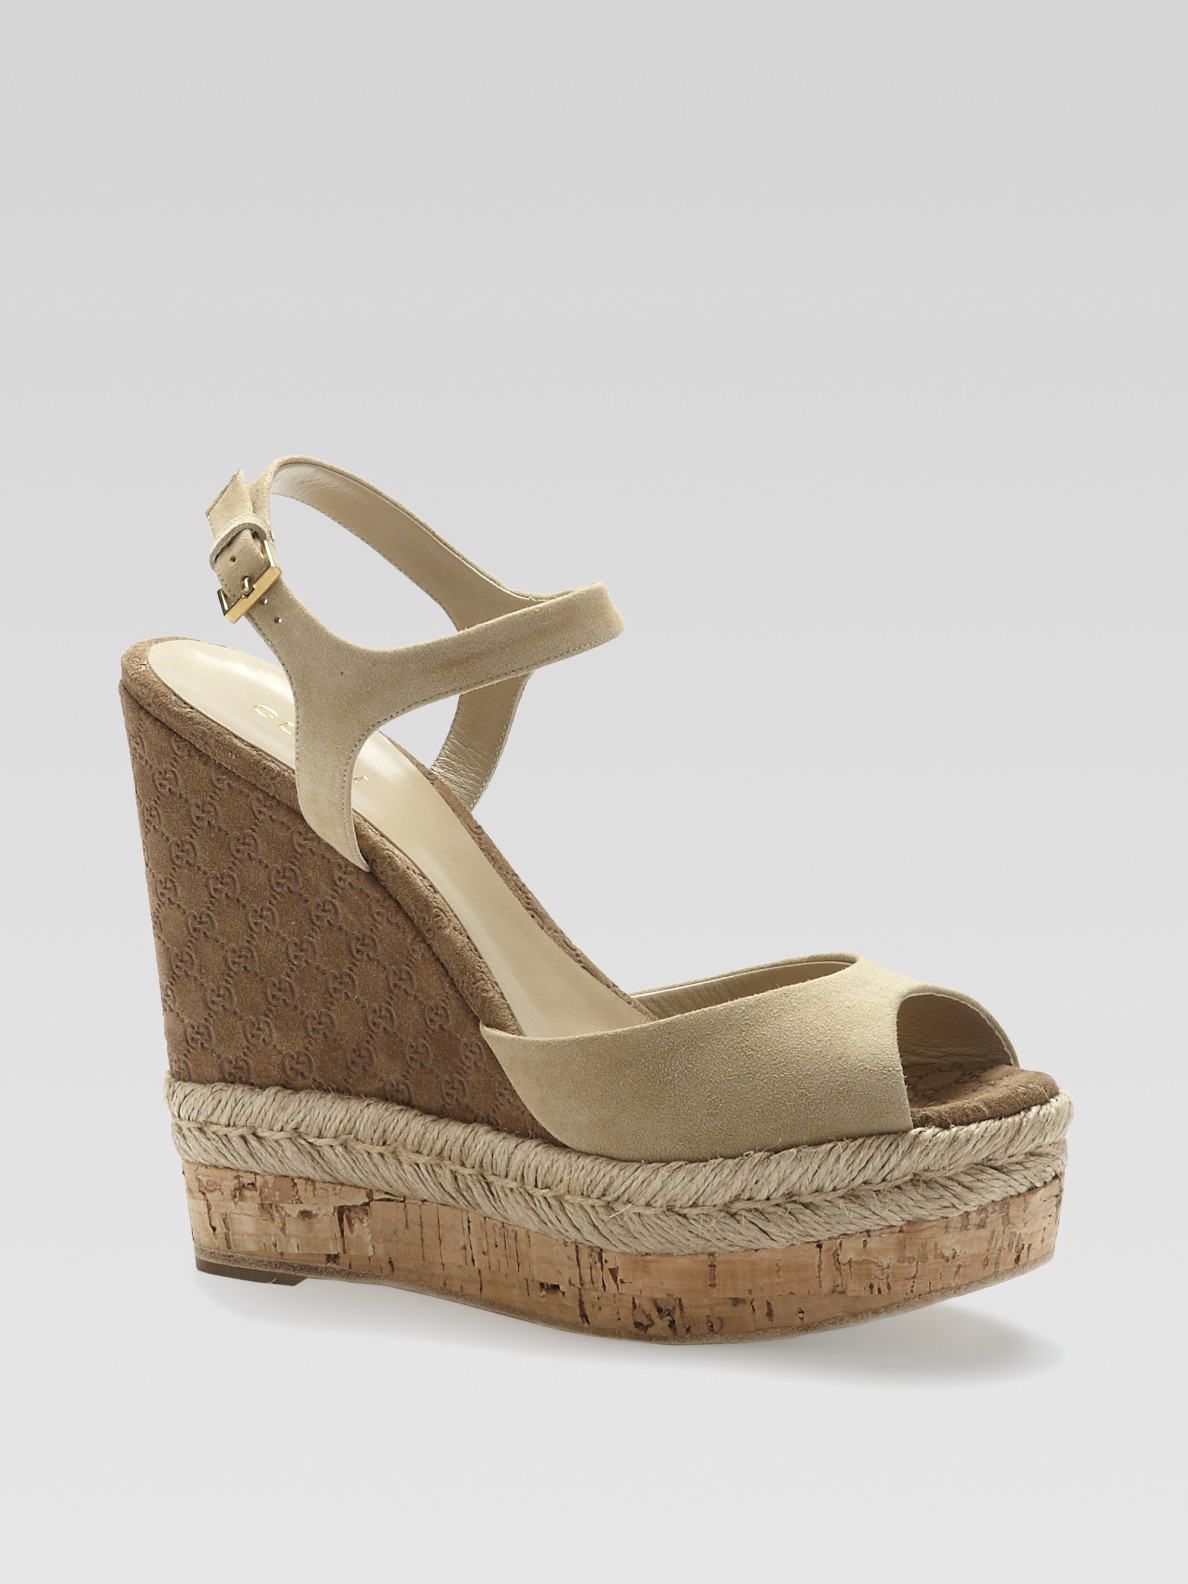 Gucci Hollie Suede Cork Wedge Sandals in Cream (Natural) - Lyst